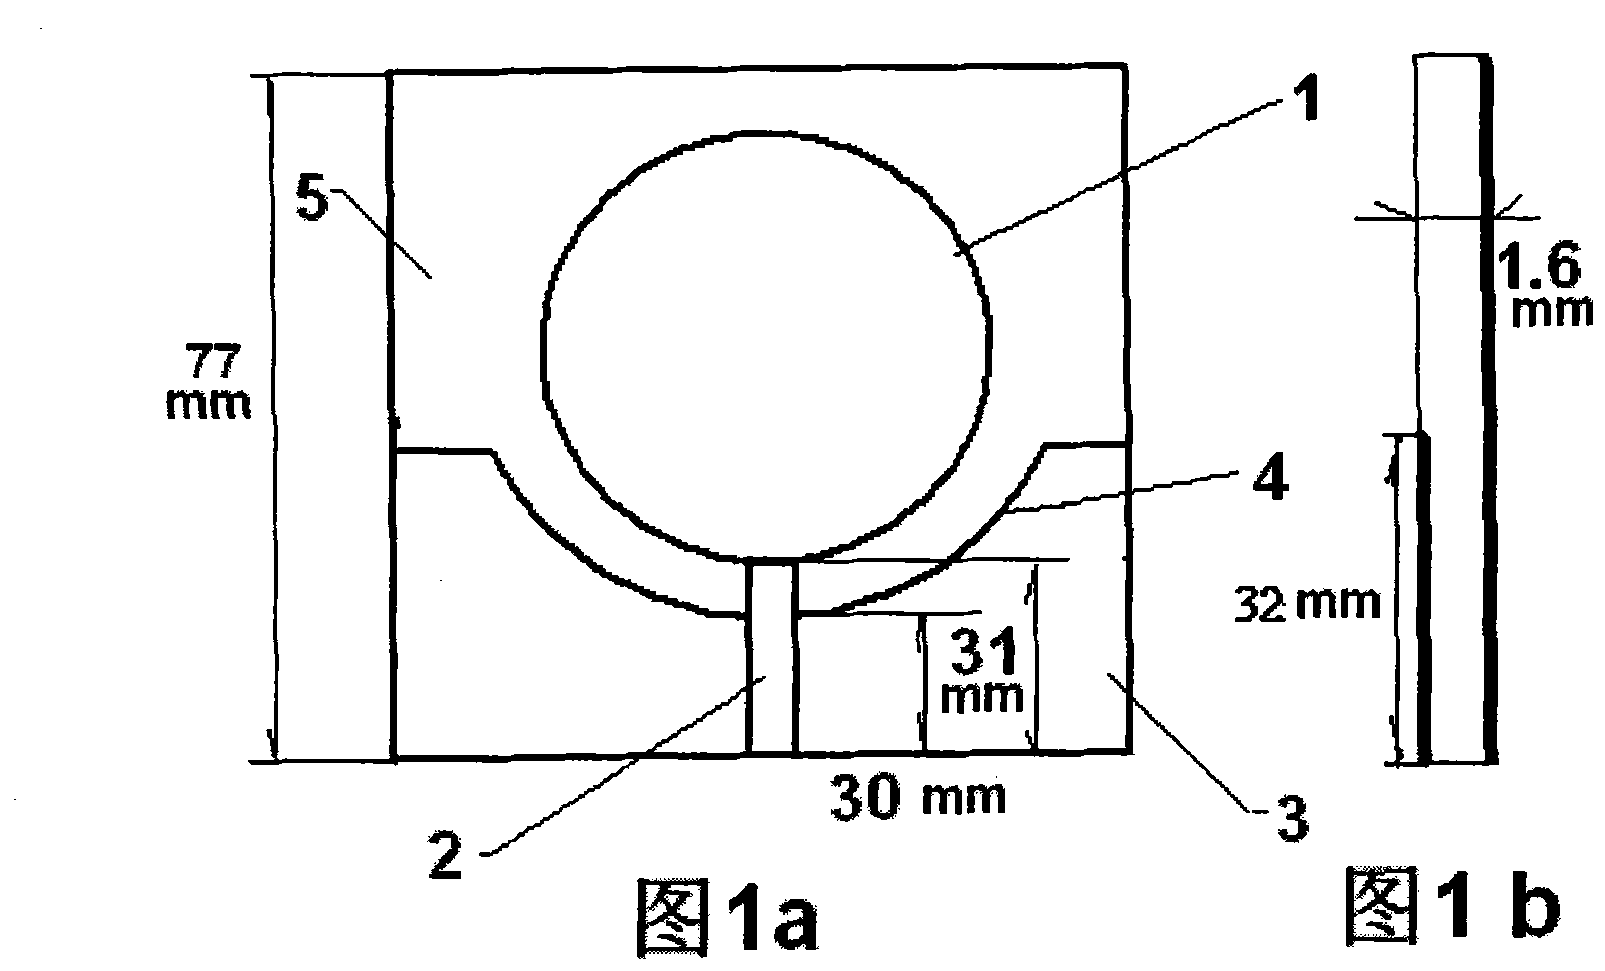 A floor-mounted curve groove type elliptic plane monopolar antenna